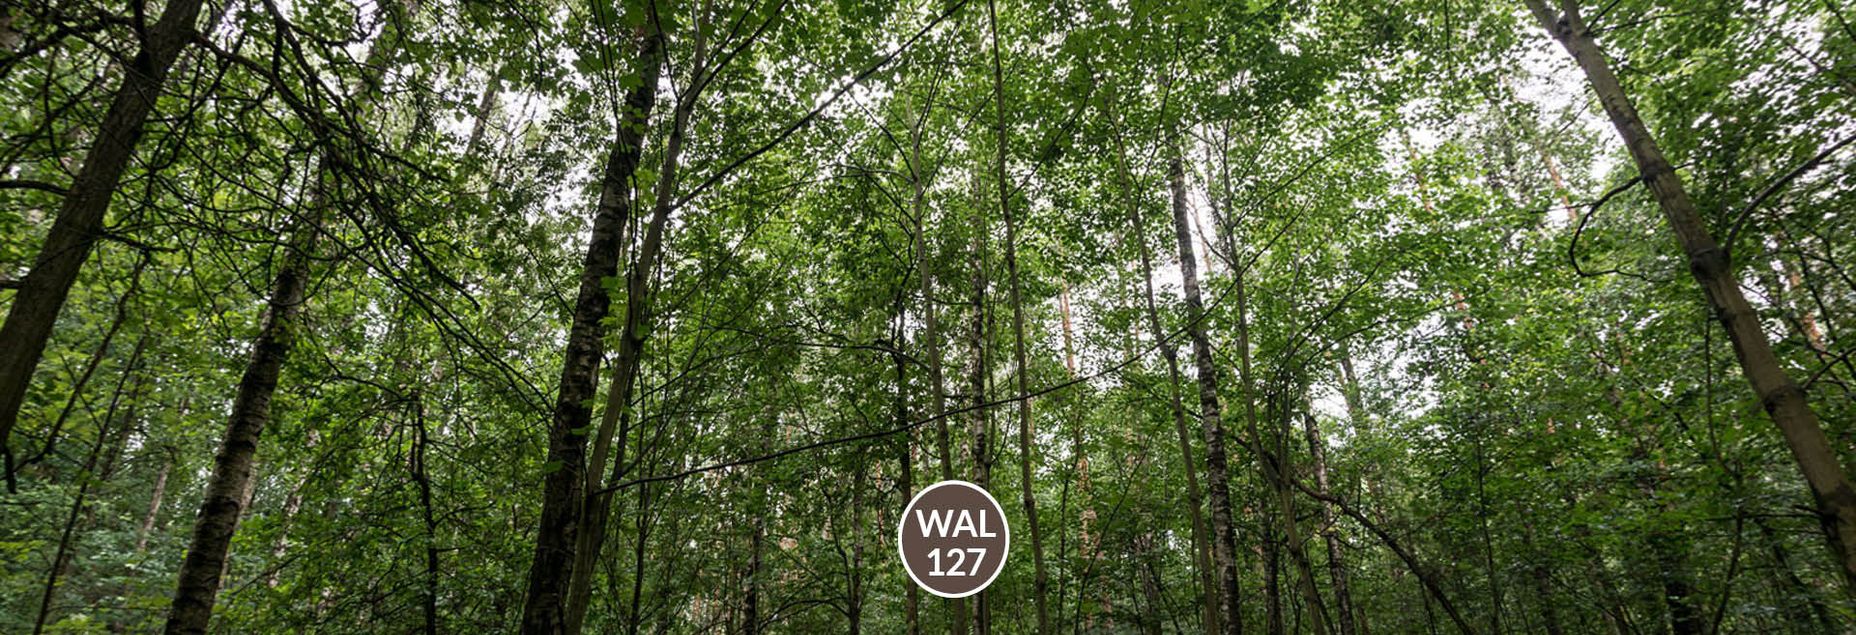 FriedWald-Onlineshop WAL 127